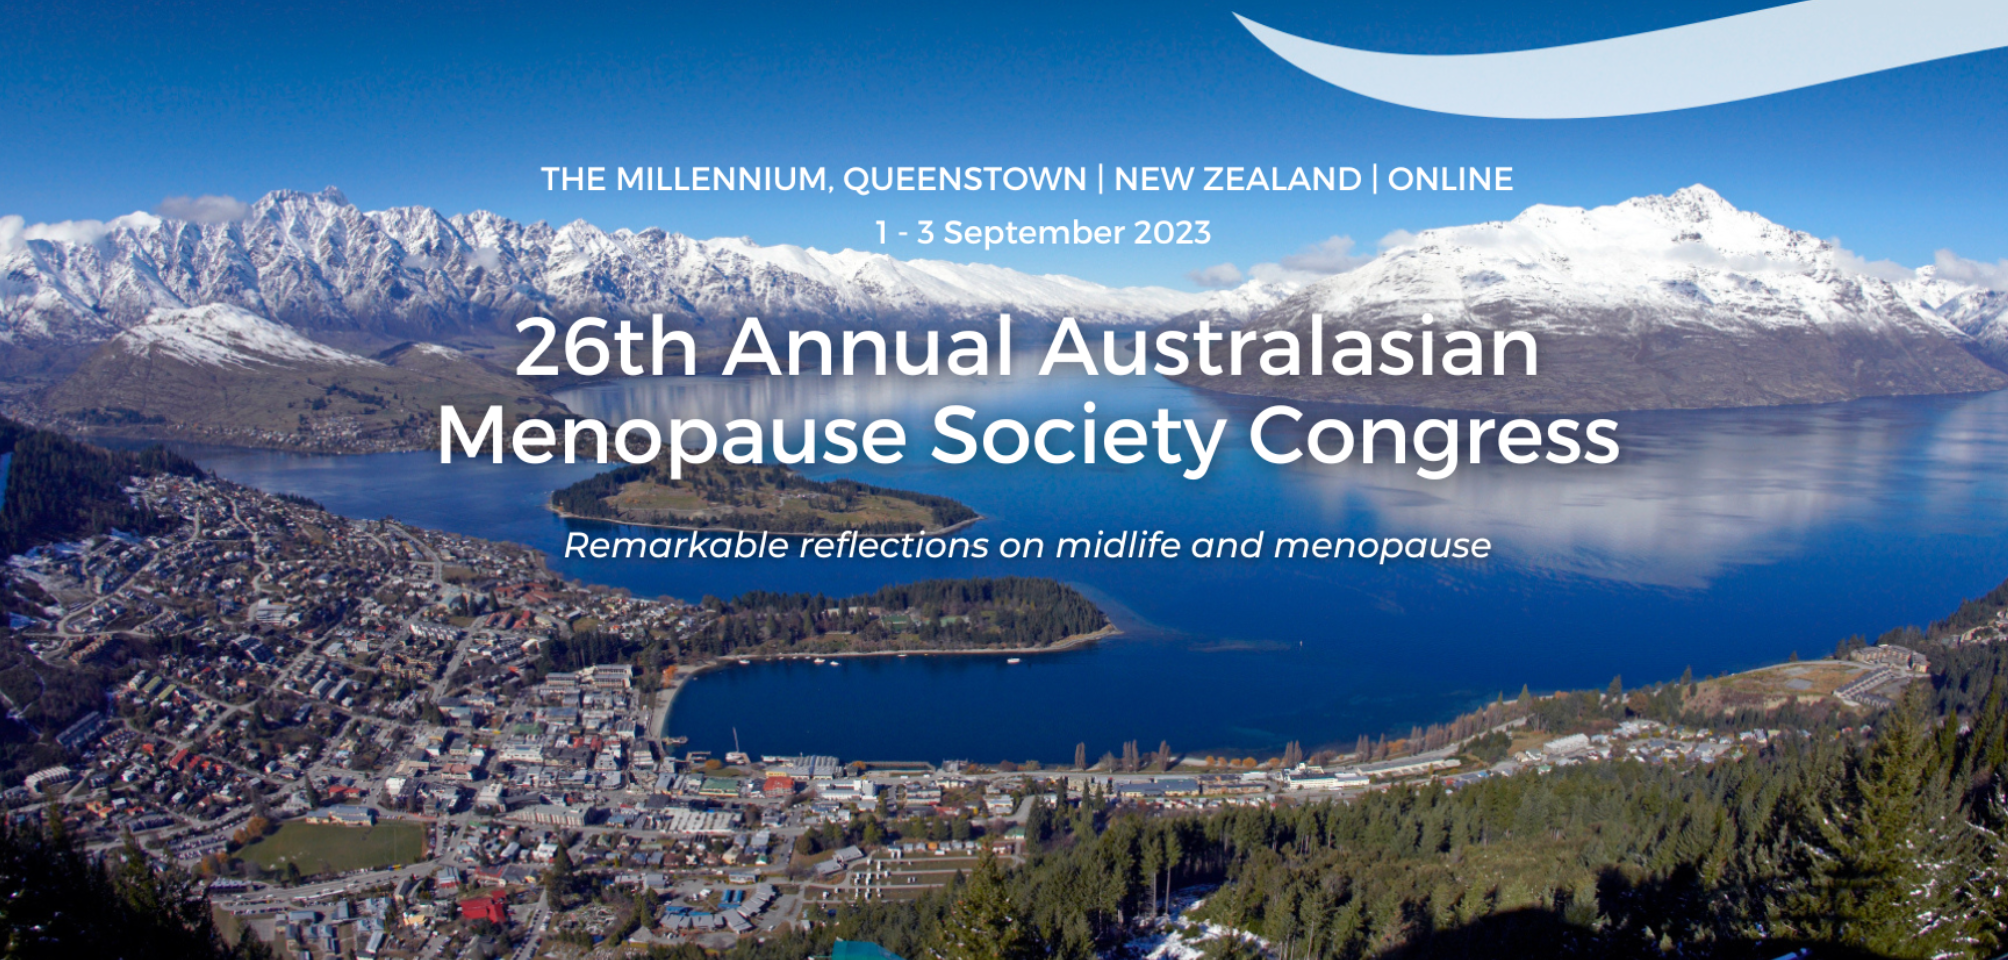 26th Annual Australasian Menopause Society Congress: 1-3 September thumbnail